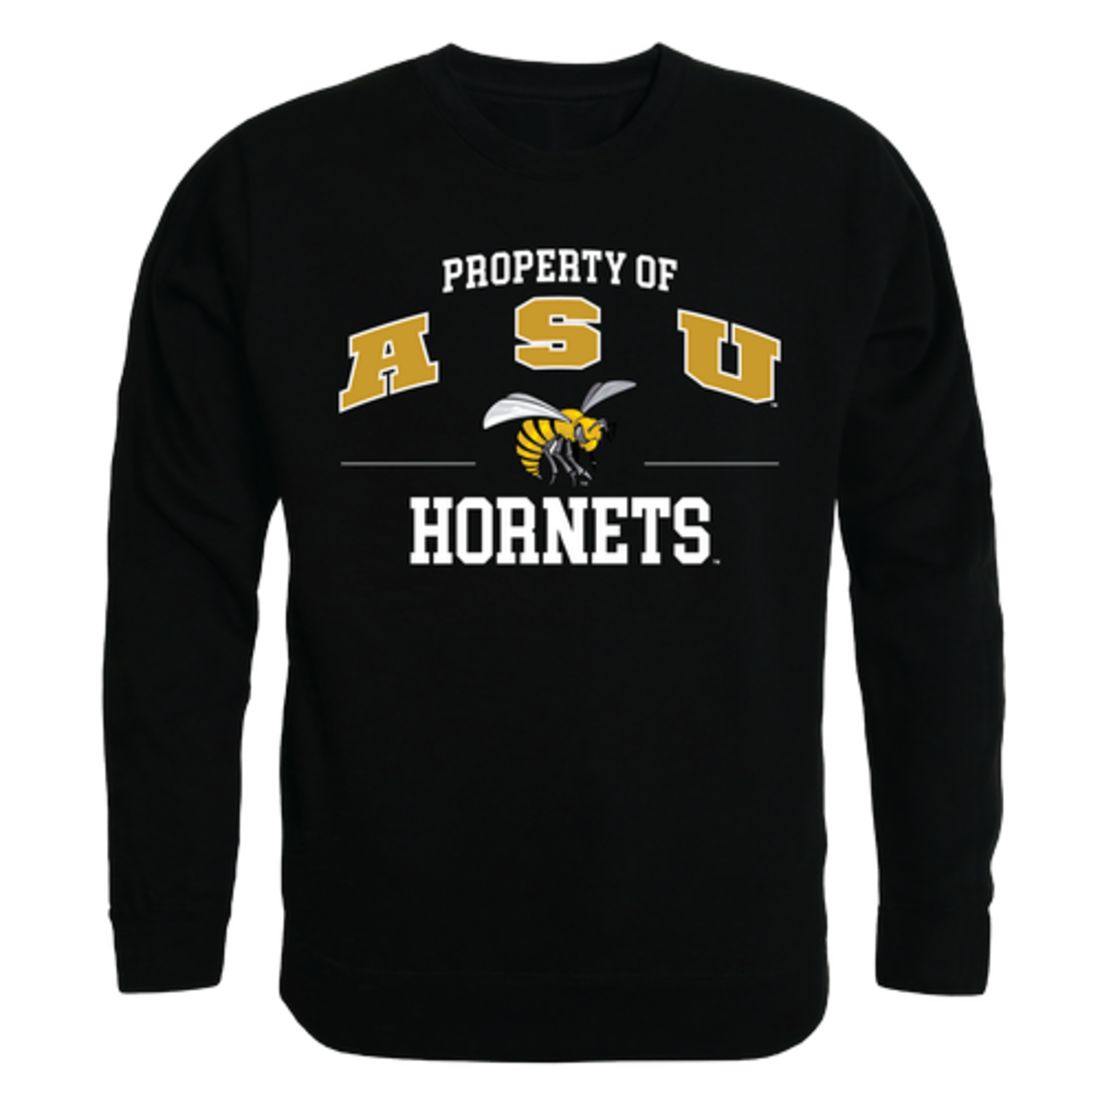 ASU Alabama State University Hornets Property Crewneck Pullover Sweatshirt Sweater Black-Campus-Wardrobe